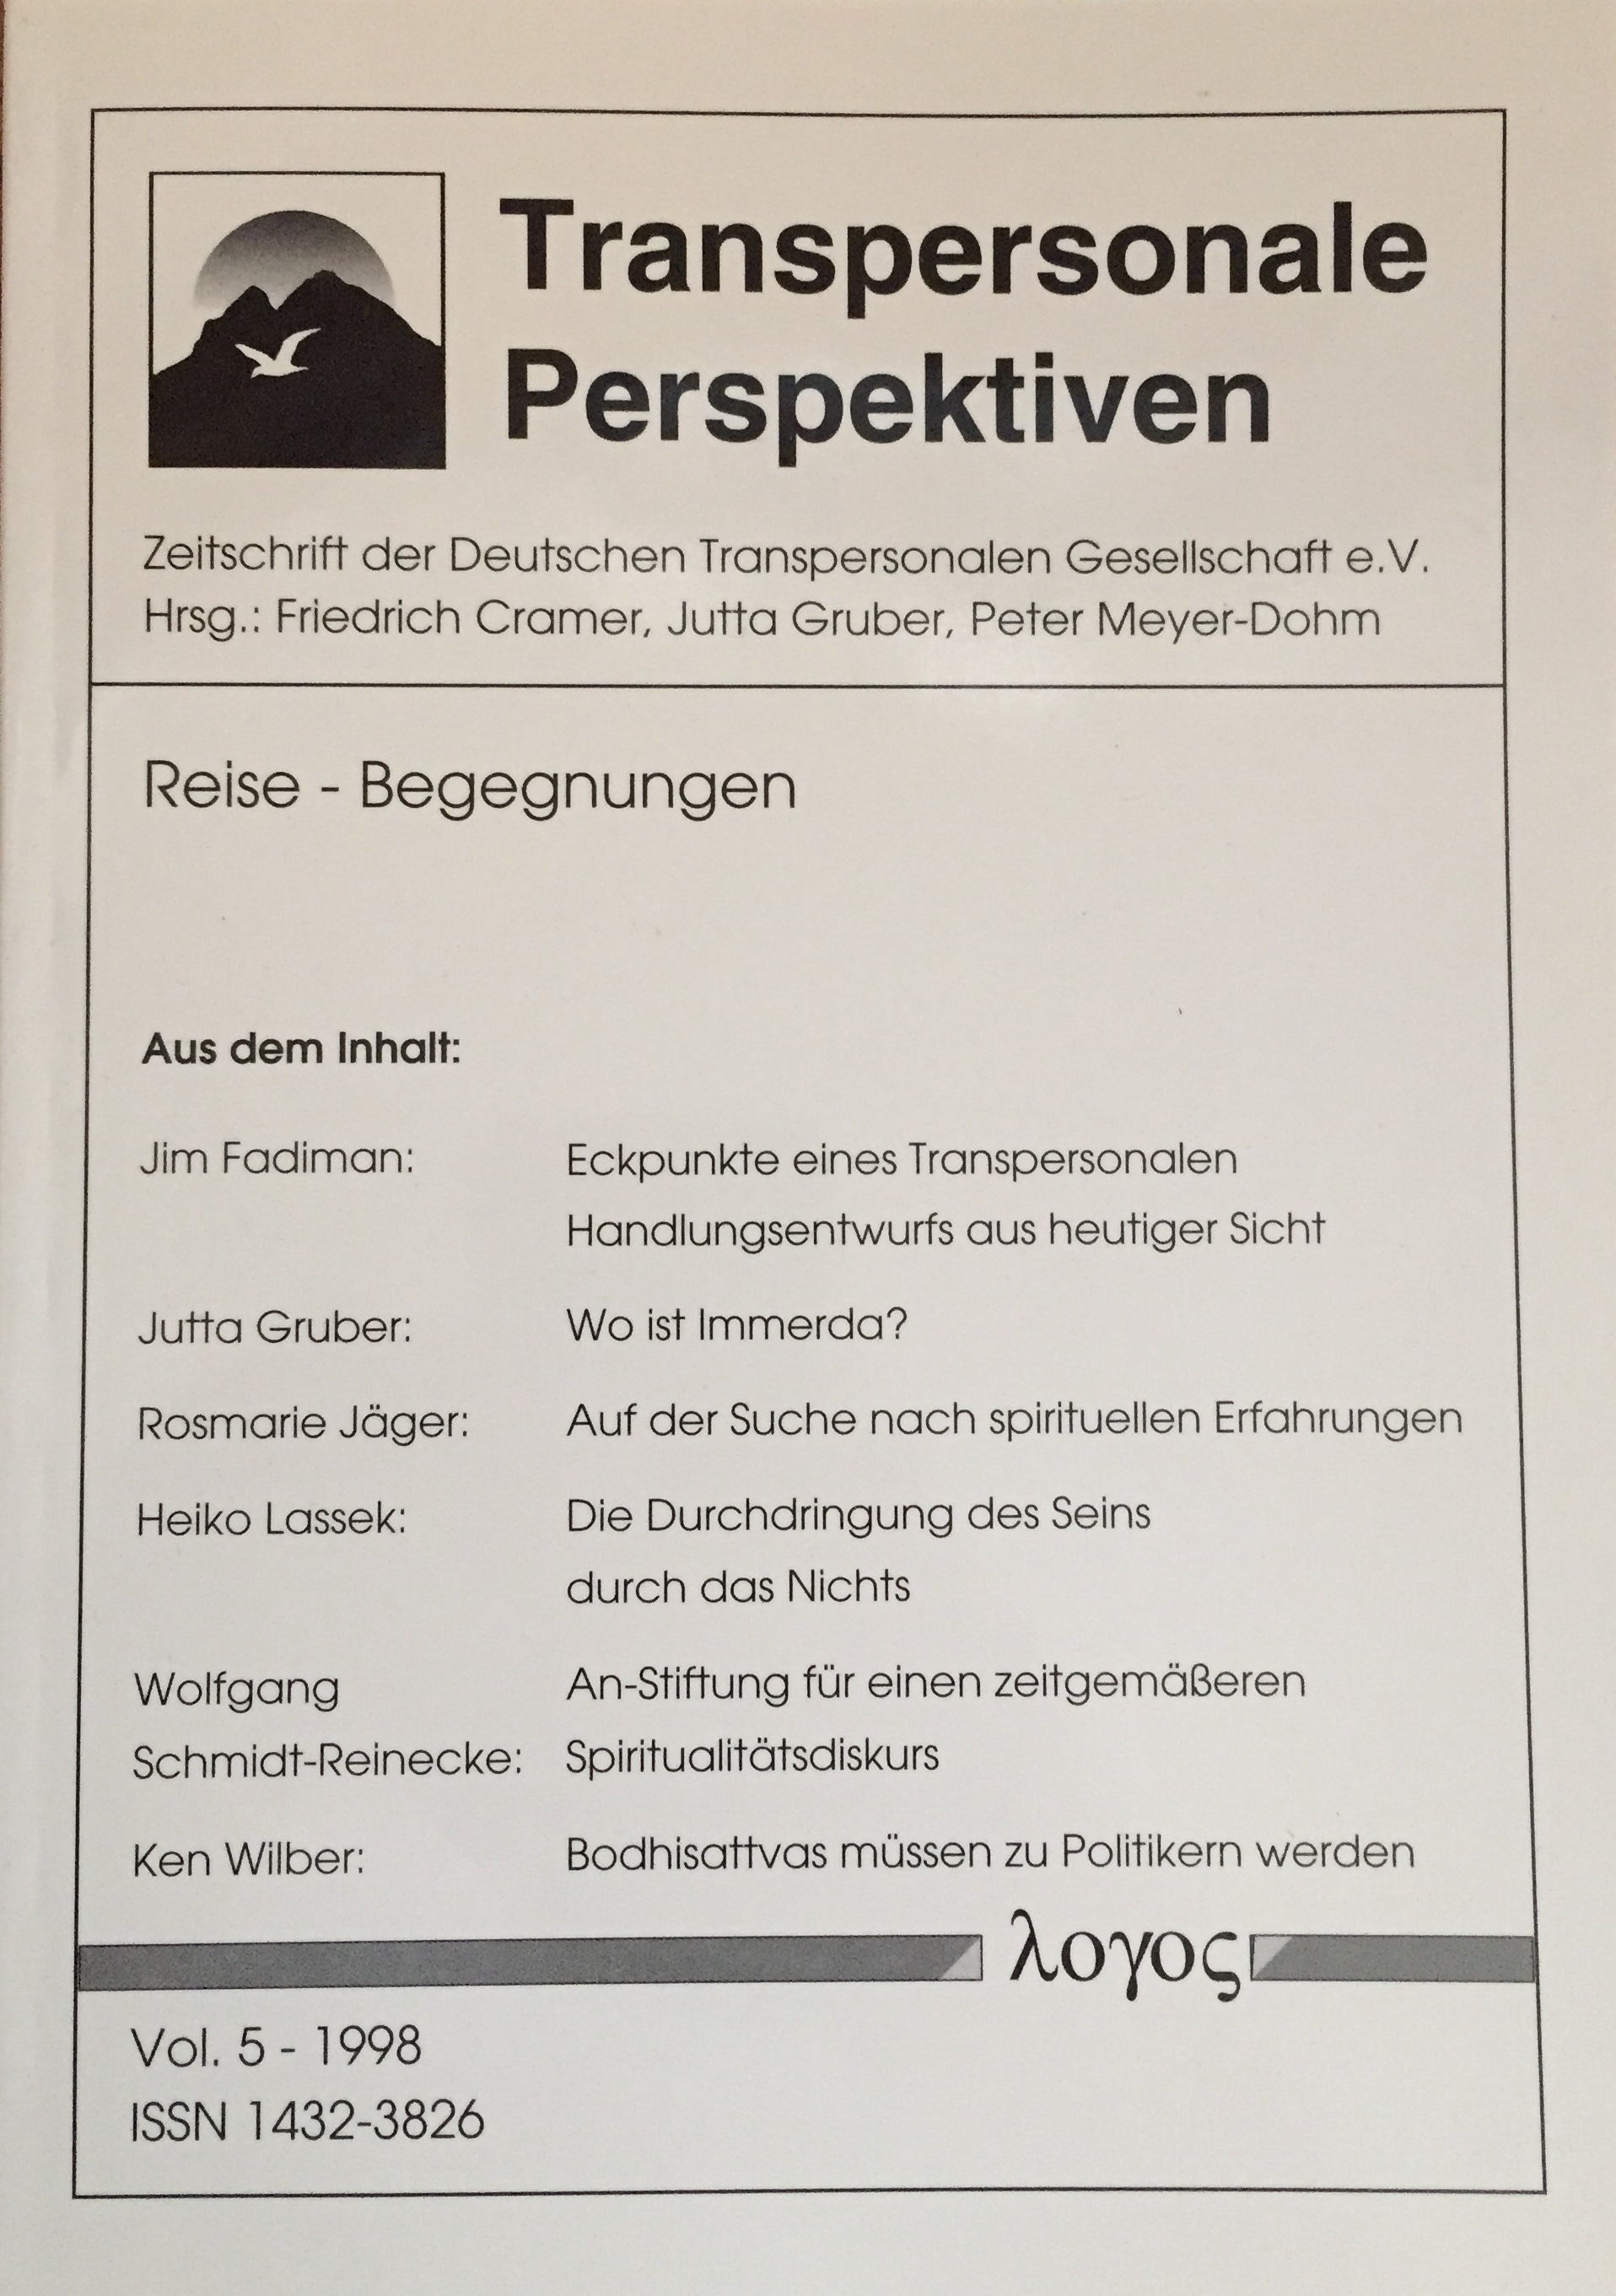 Transpersonale Perspektiven Volume 5/1998